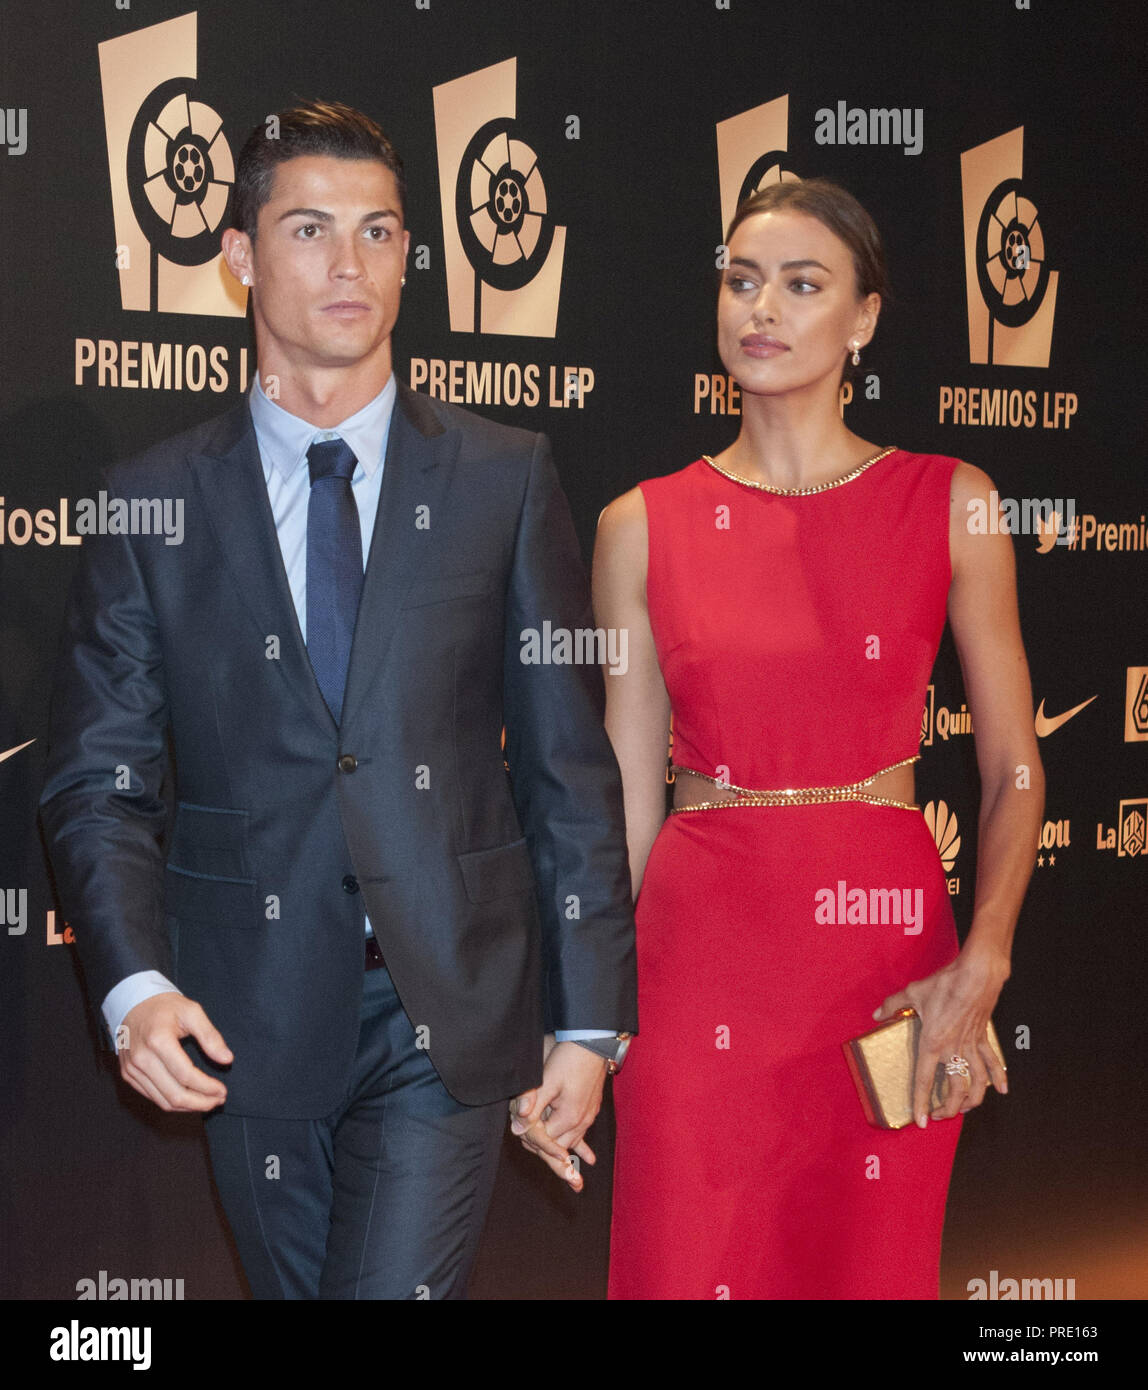 MADRID, SPAIN - OCTOBER 27:   Cristiano Ronaldo and Irina Shayk attends the LFP (Professional Football League) Awards Gala 2014 on October 27, 2014 in Madrid, Spain.   People:  Cristiano Ronaldo and Irina Shayk Stock Photo